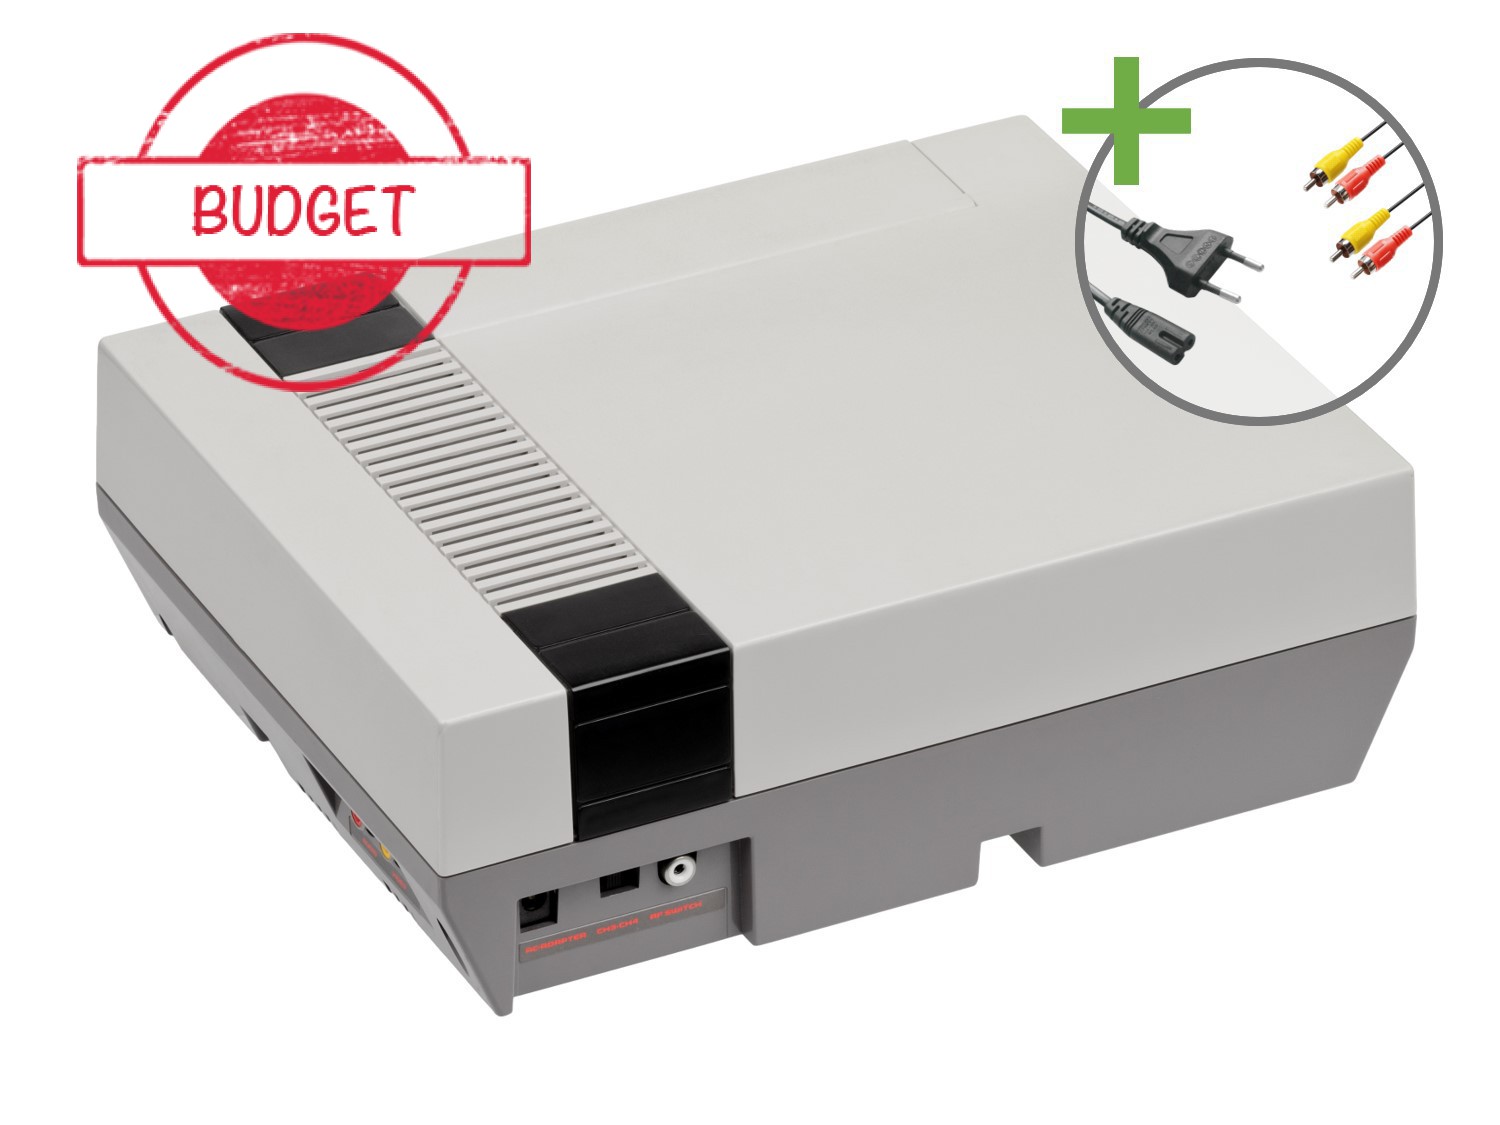 Nintendo NES Starter Pack - Super Mario Bros. 3 Control Deck Edition - Budget - Nintendo NES Hardware - 3